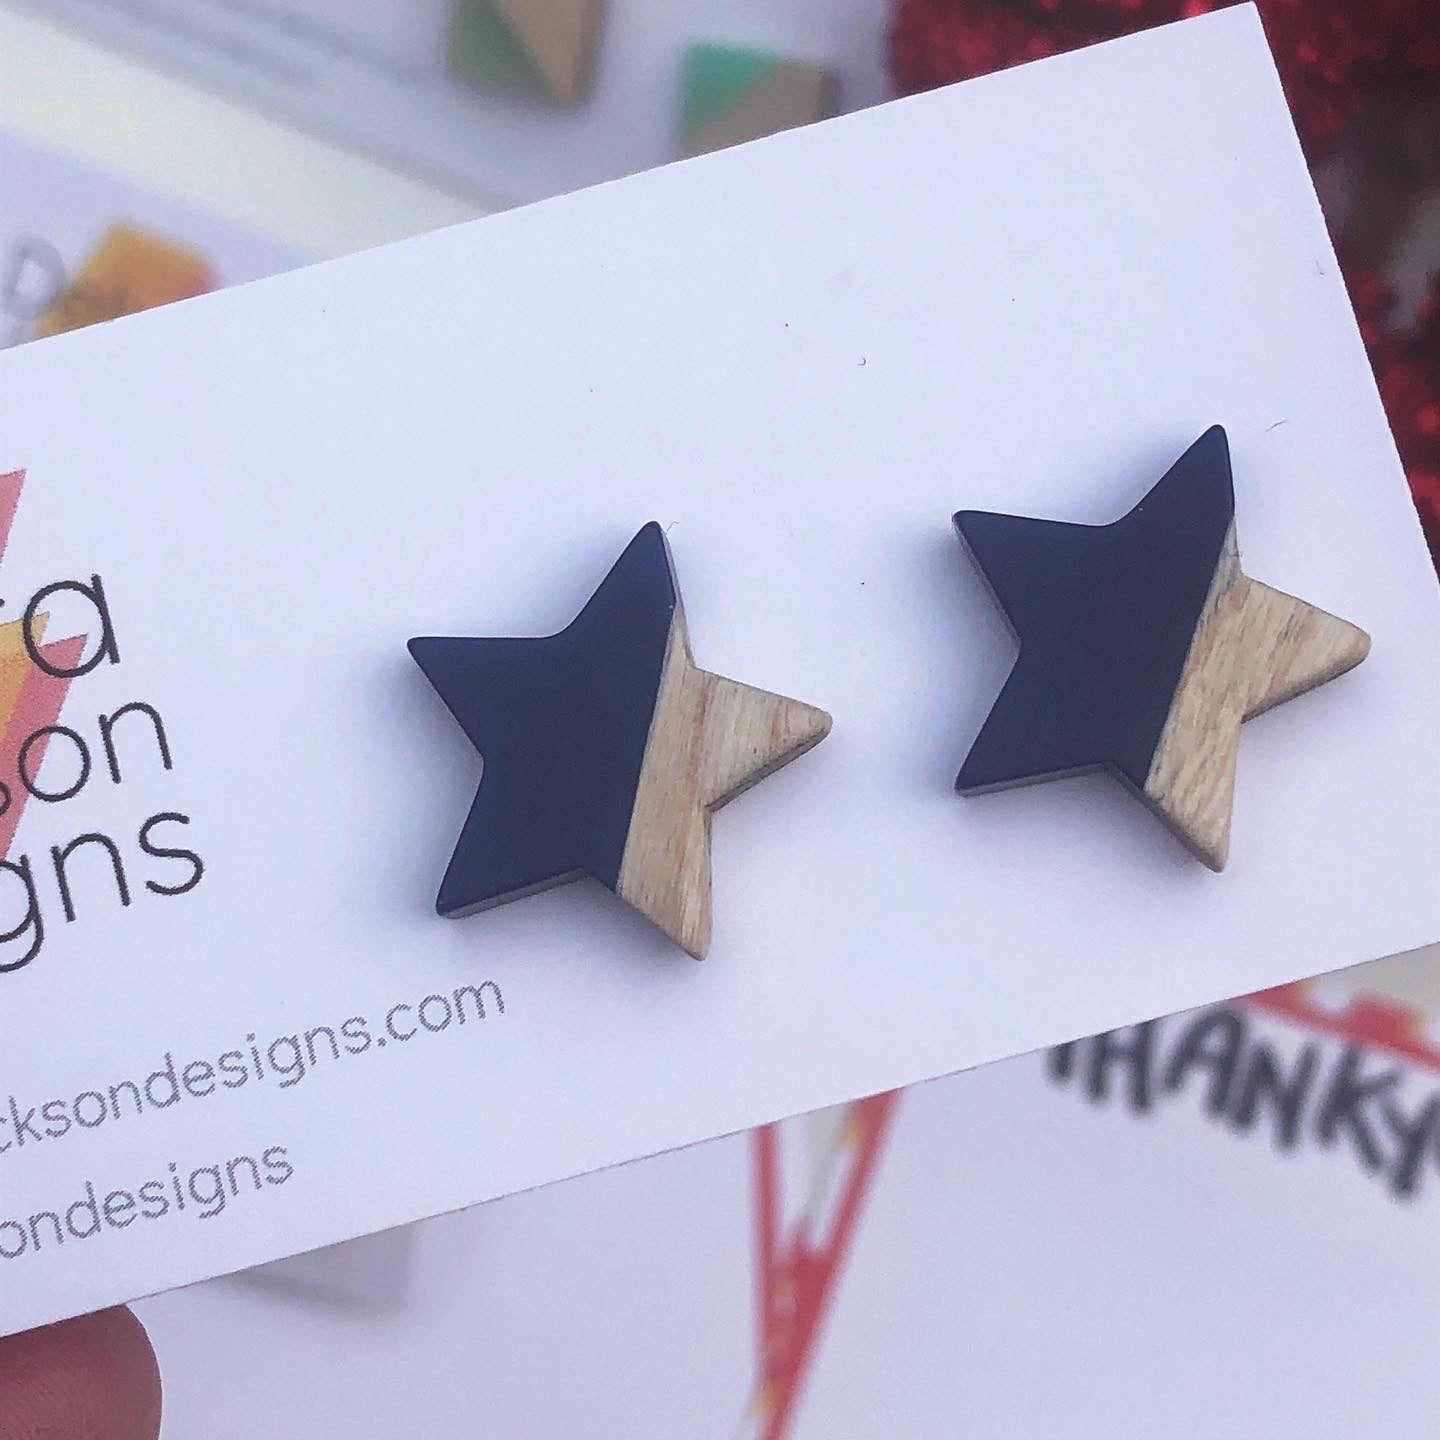 Wood and resin star earrings